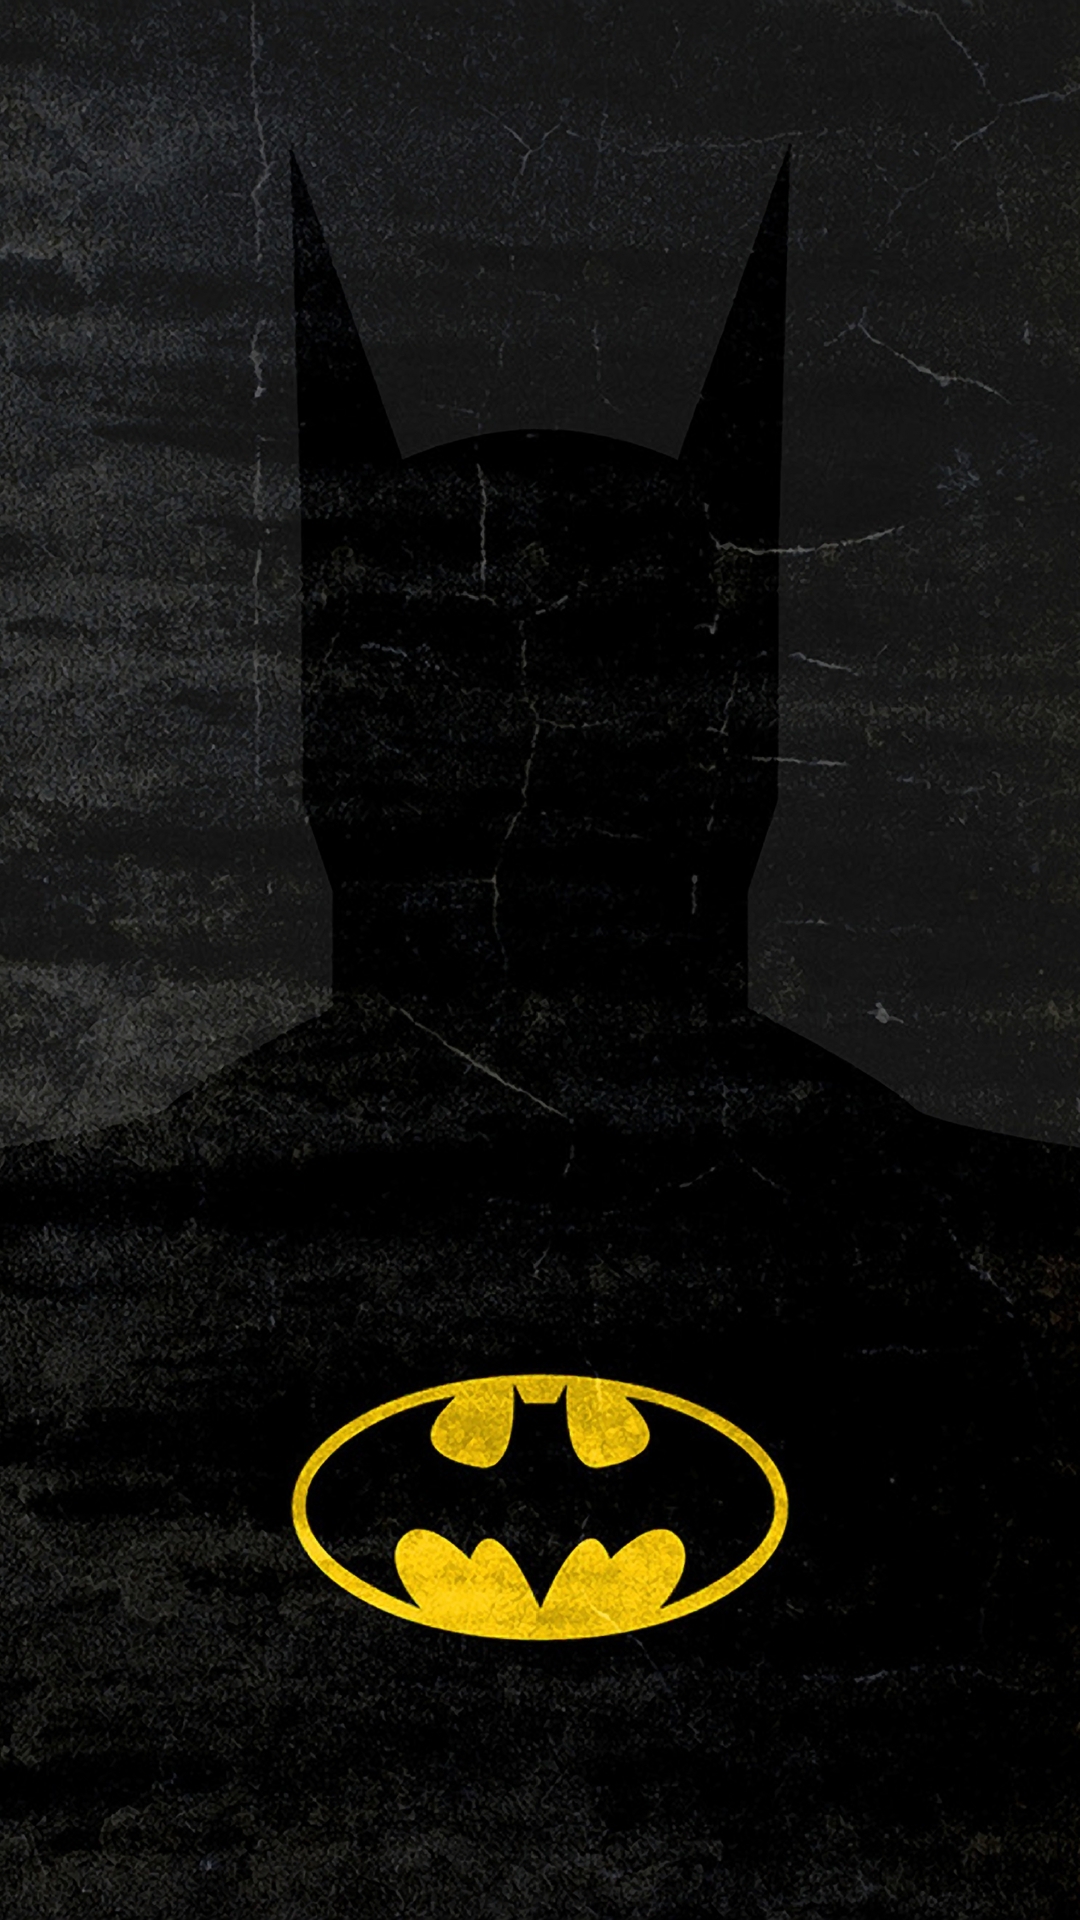 Wallpaper Batman Superhero dc Comics Comics Movie Background   Download Free Image